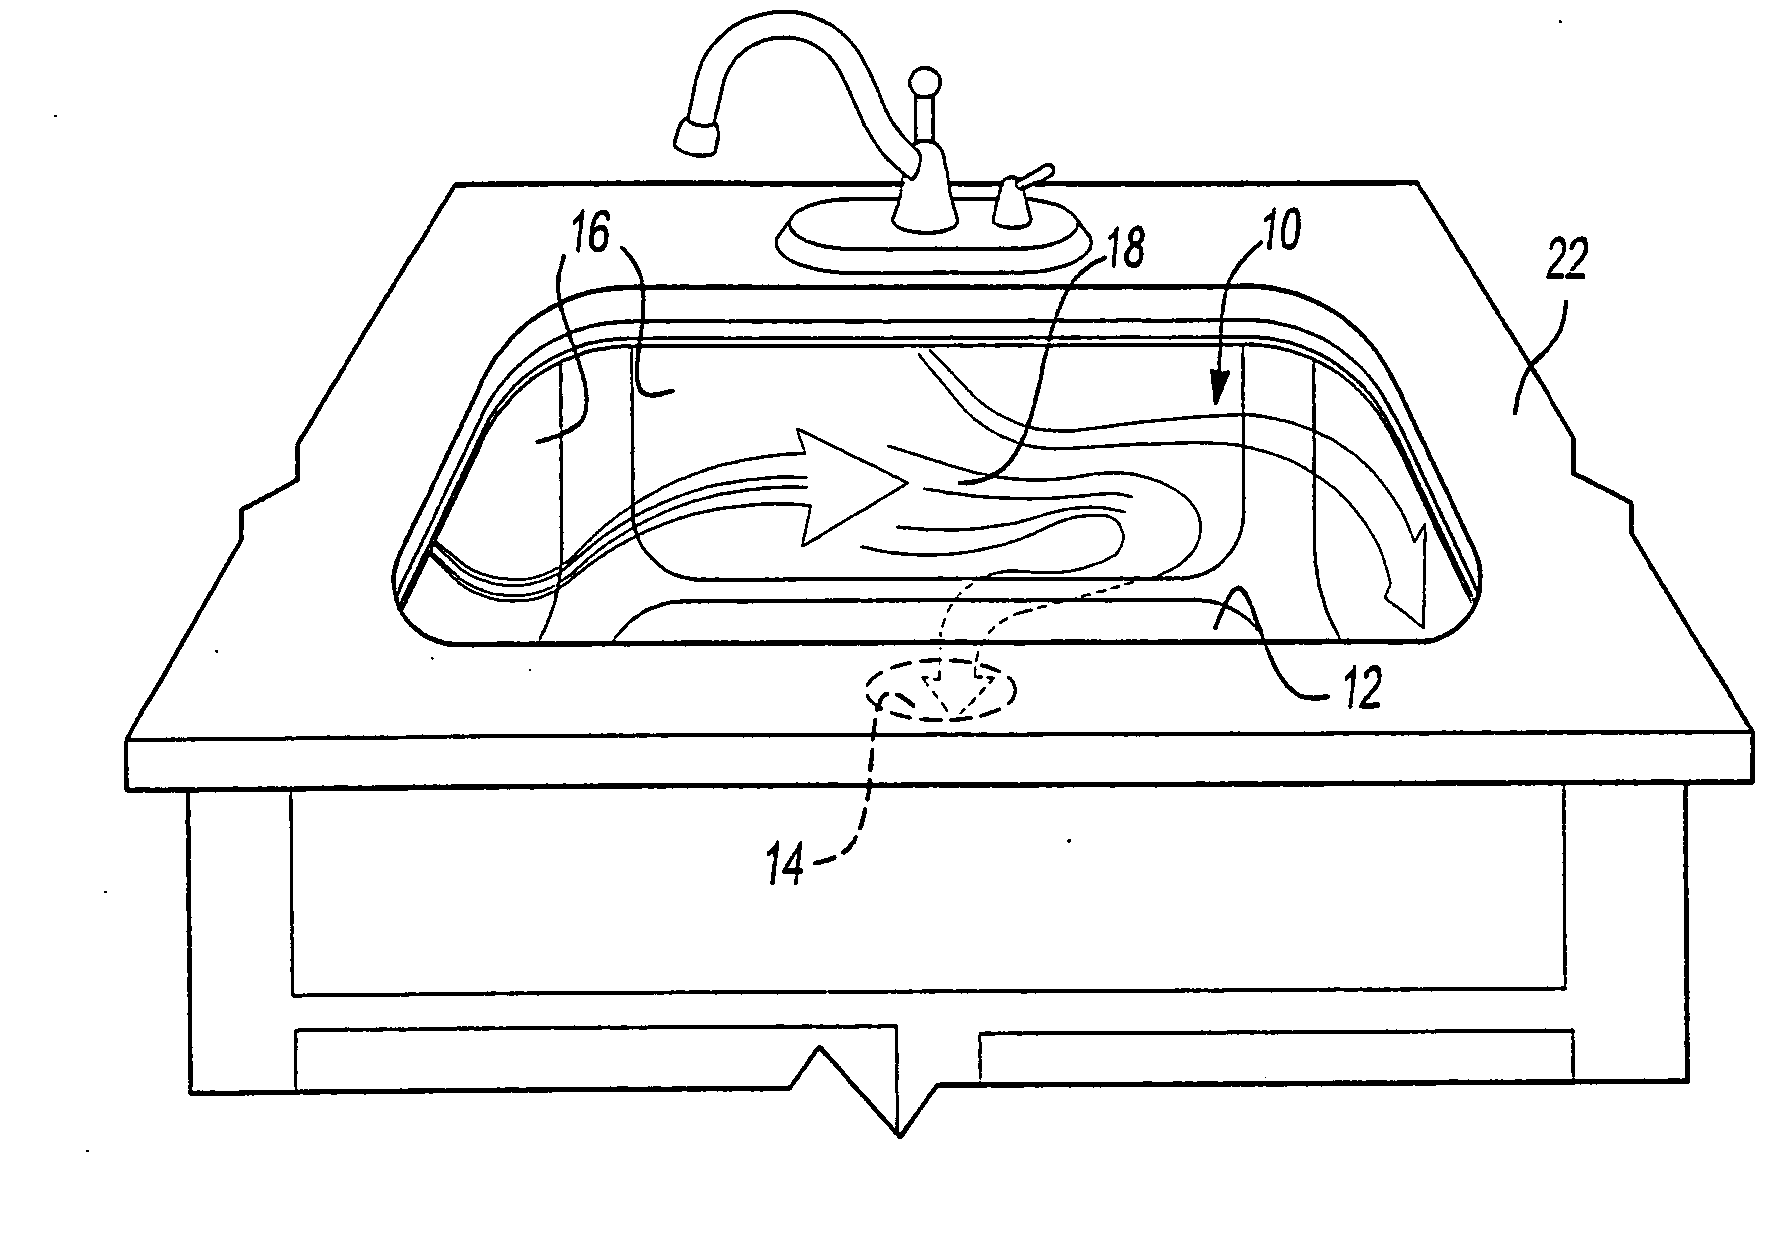 Sink construction